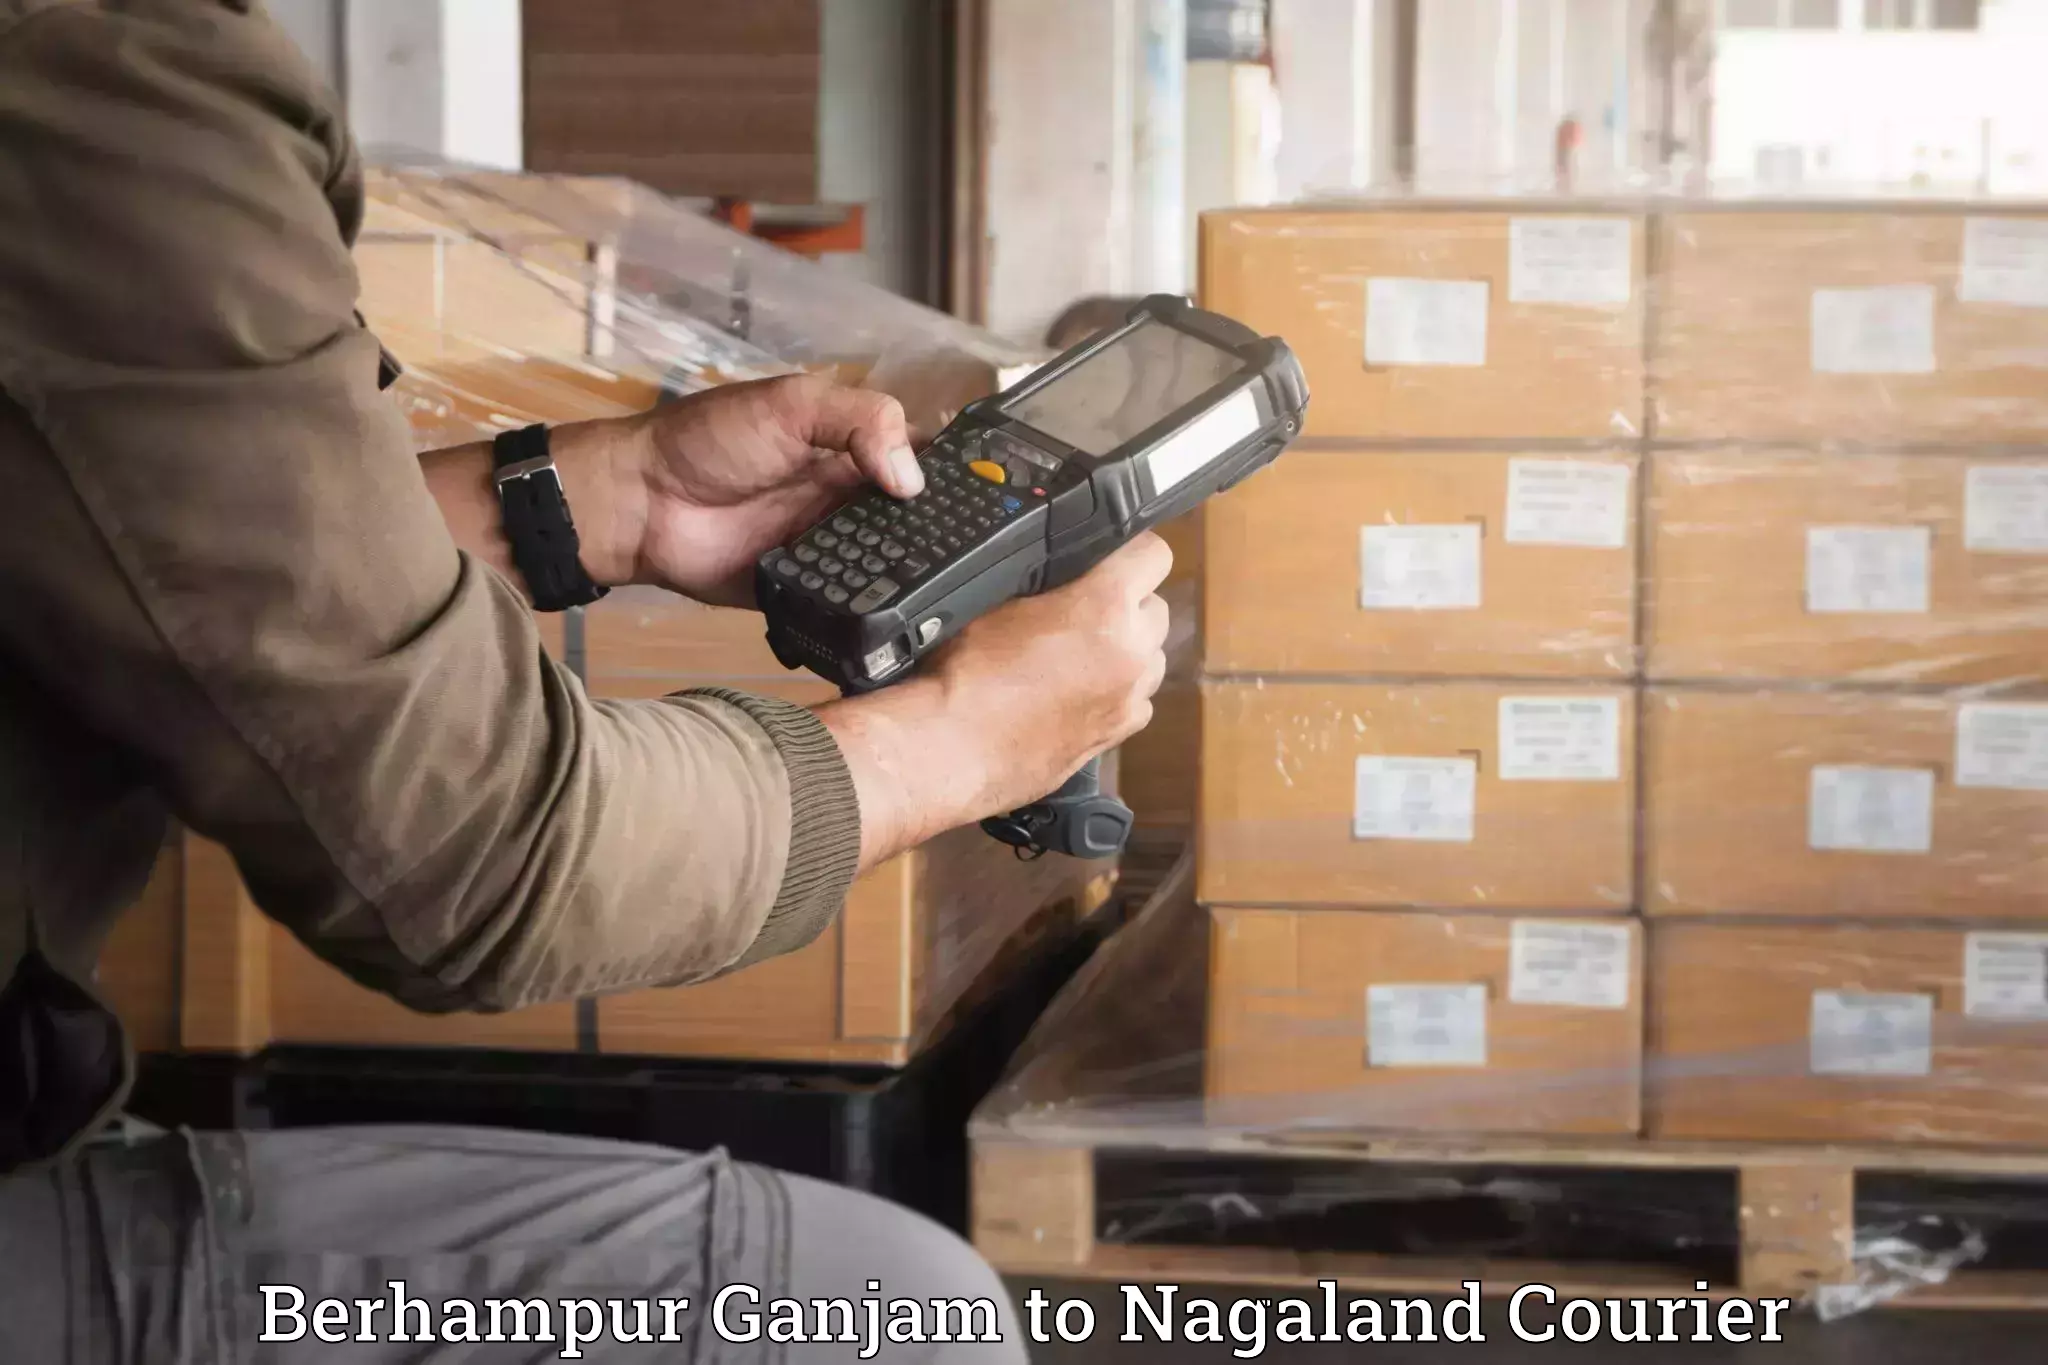 Furniture transport company Berhampur Ganjam to Nagaland